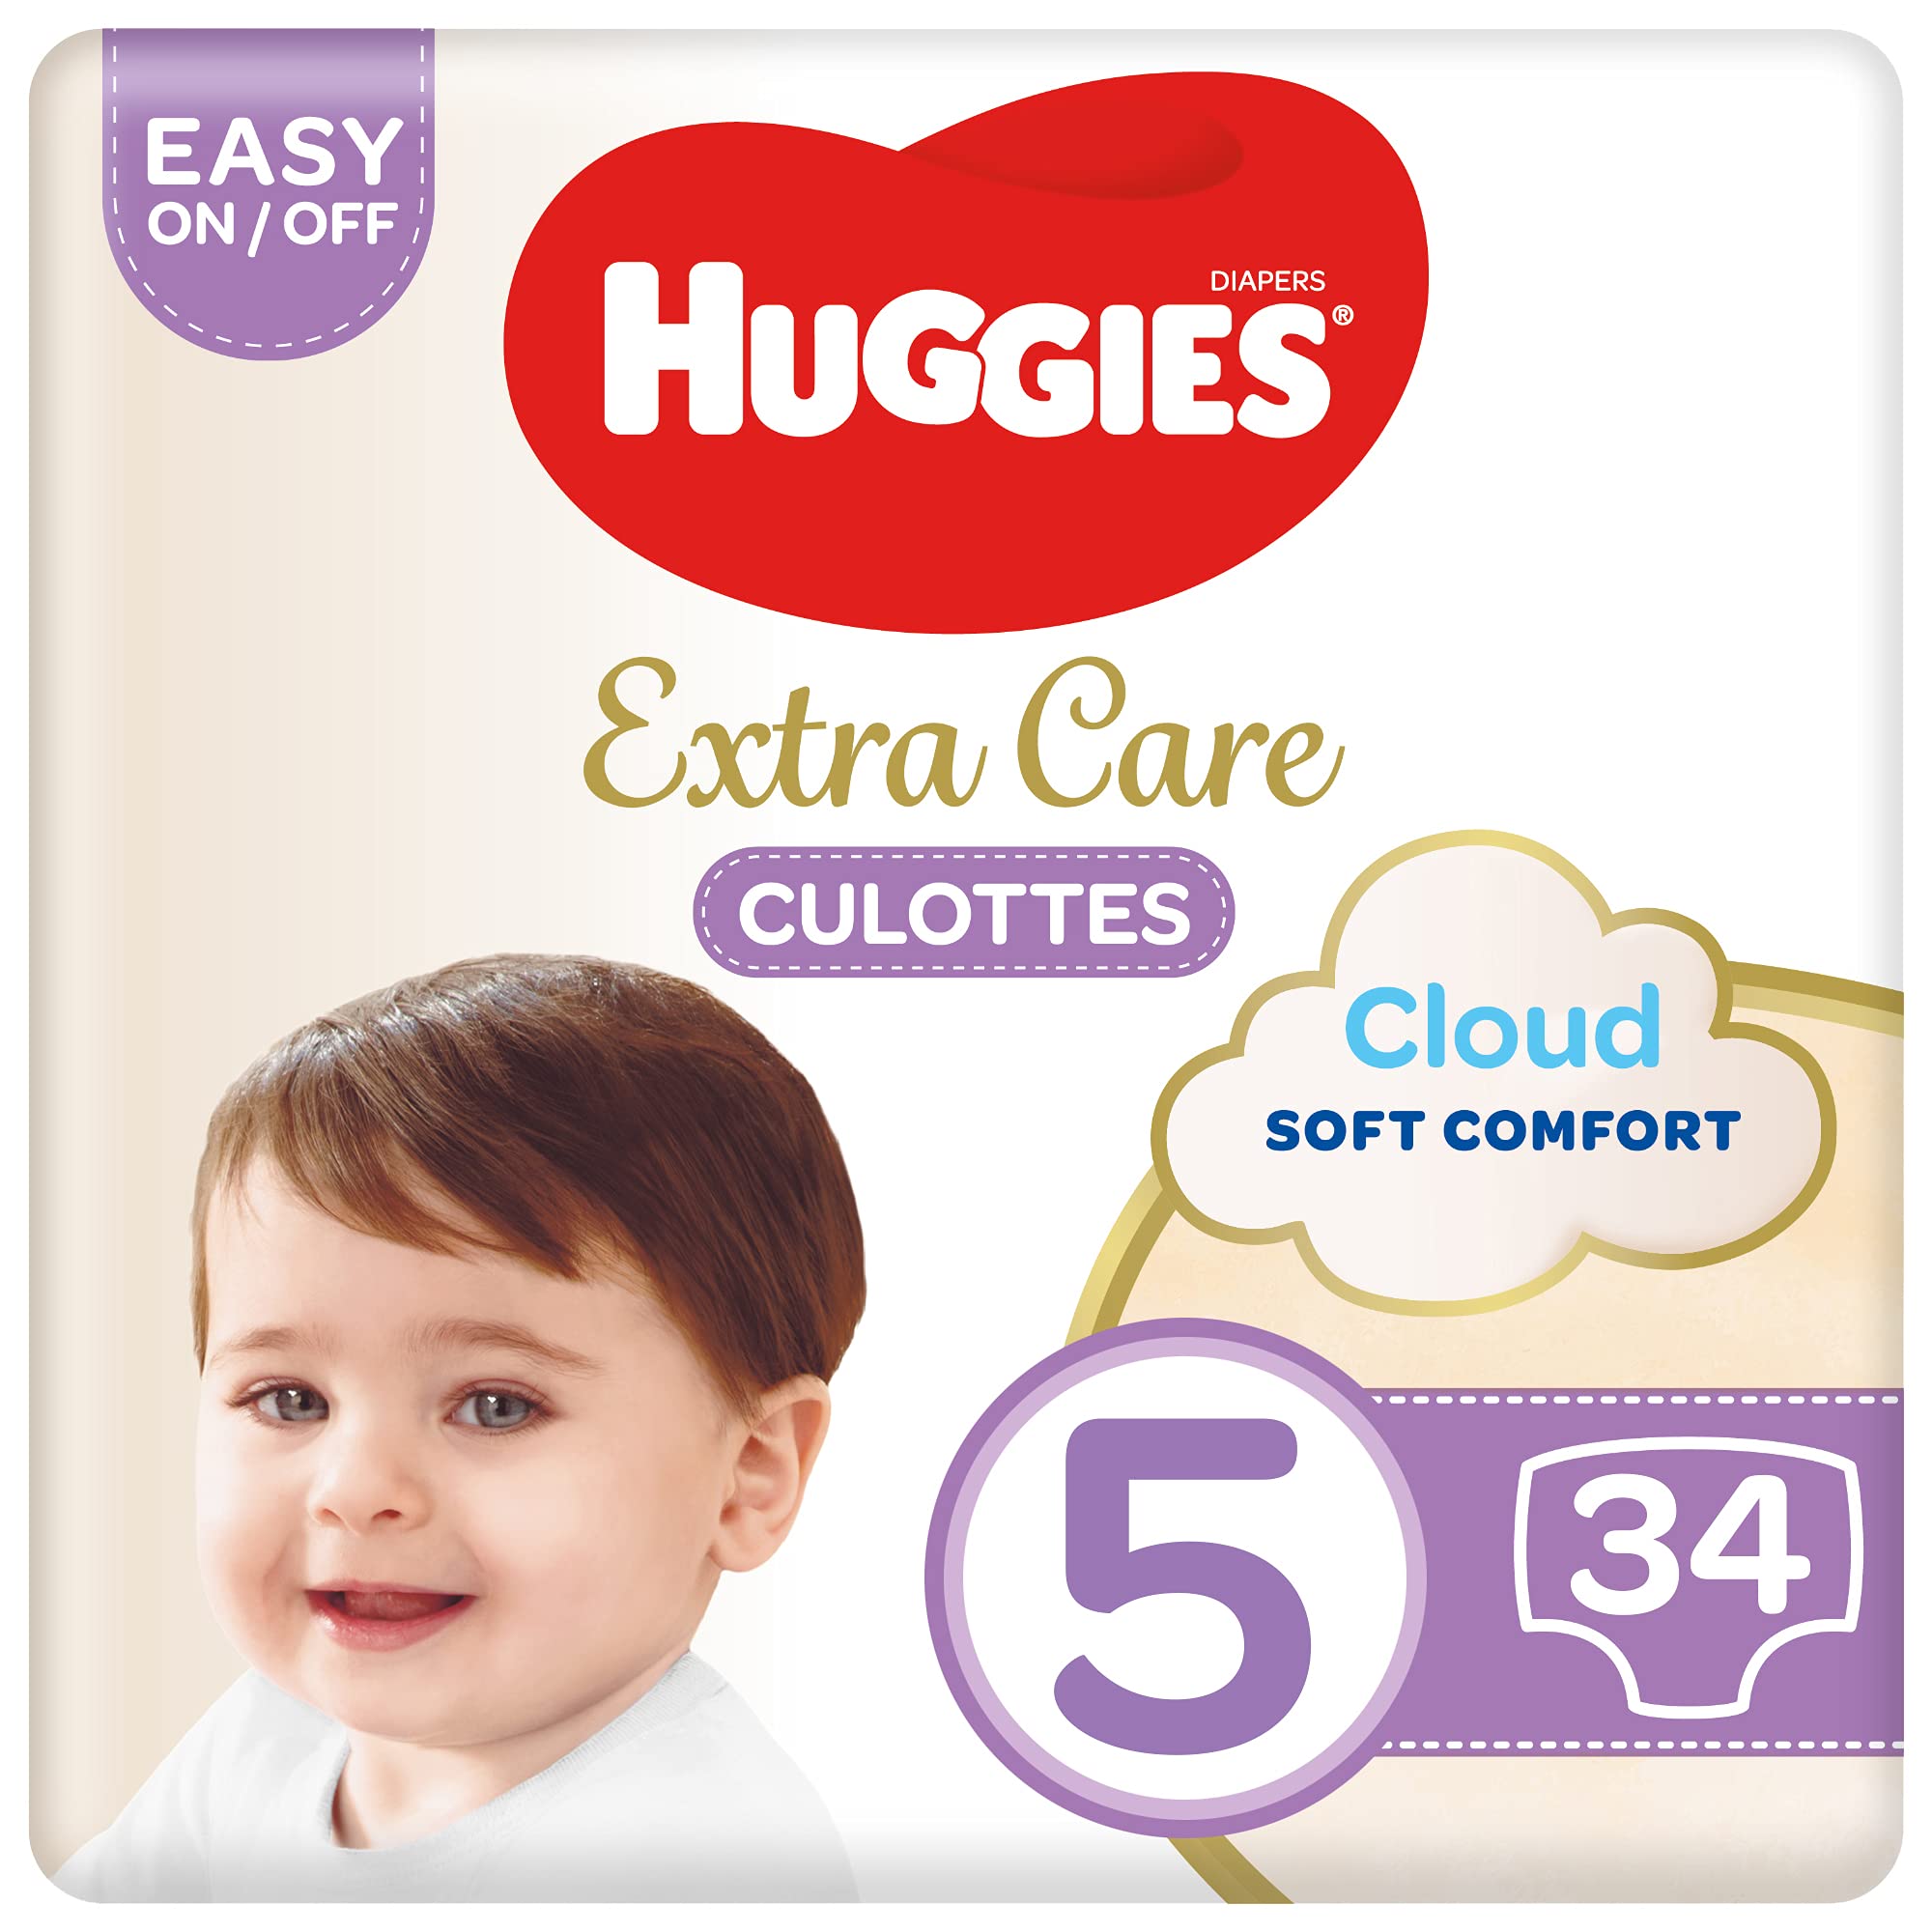 Huggies Extra Care Diaper Pants Size 5 12-17kg 34pcs حفاضات بانتي اكسترا كير من هاجيز، مقاس 5 الذي يناسب وزن 12-17 كجم، 34 قطعة